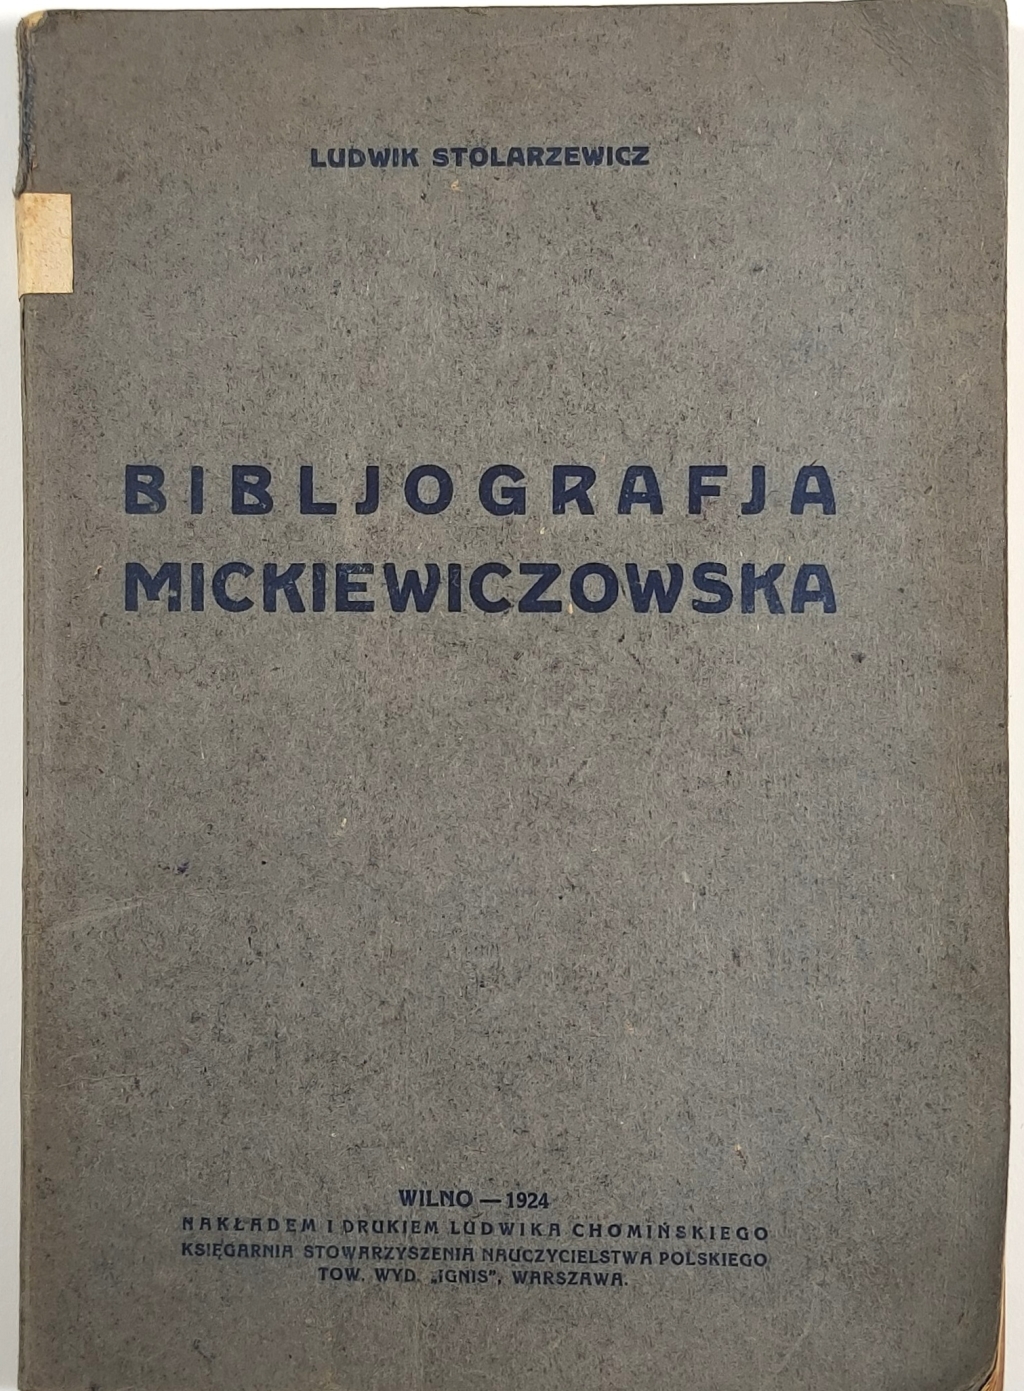 Bibljografja mickiewiczowska